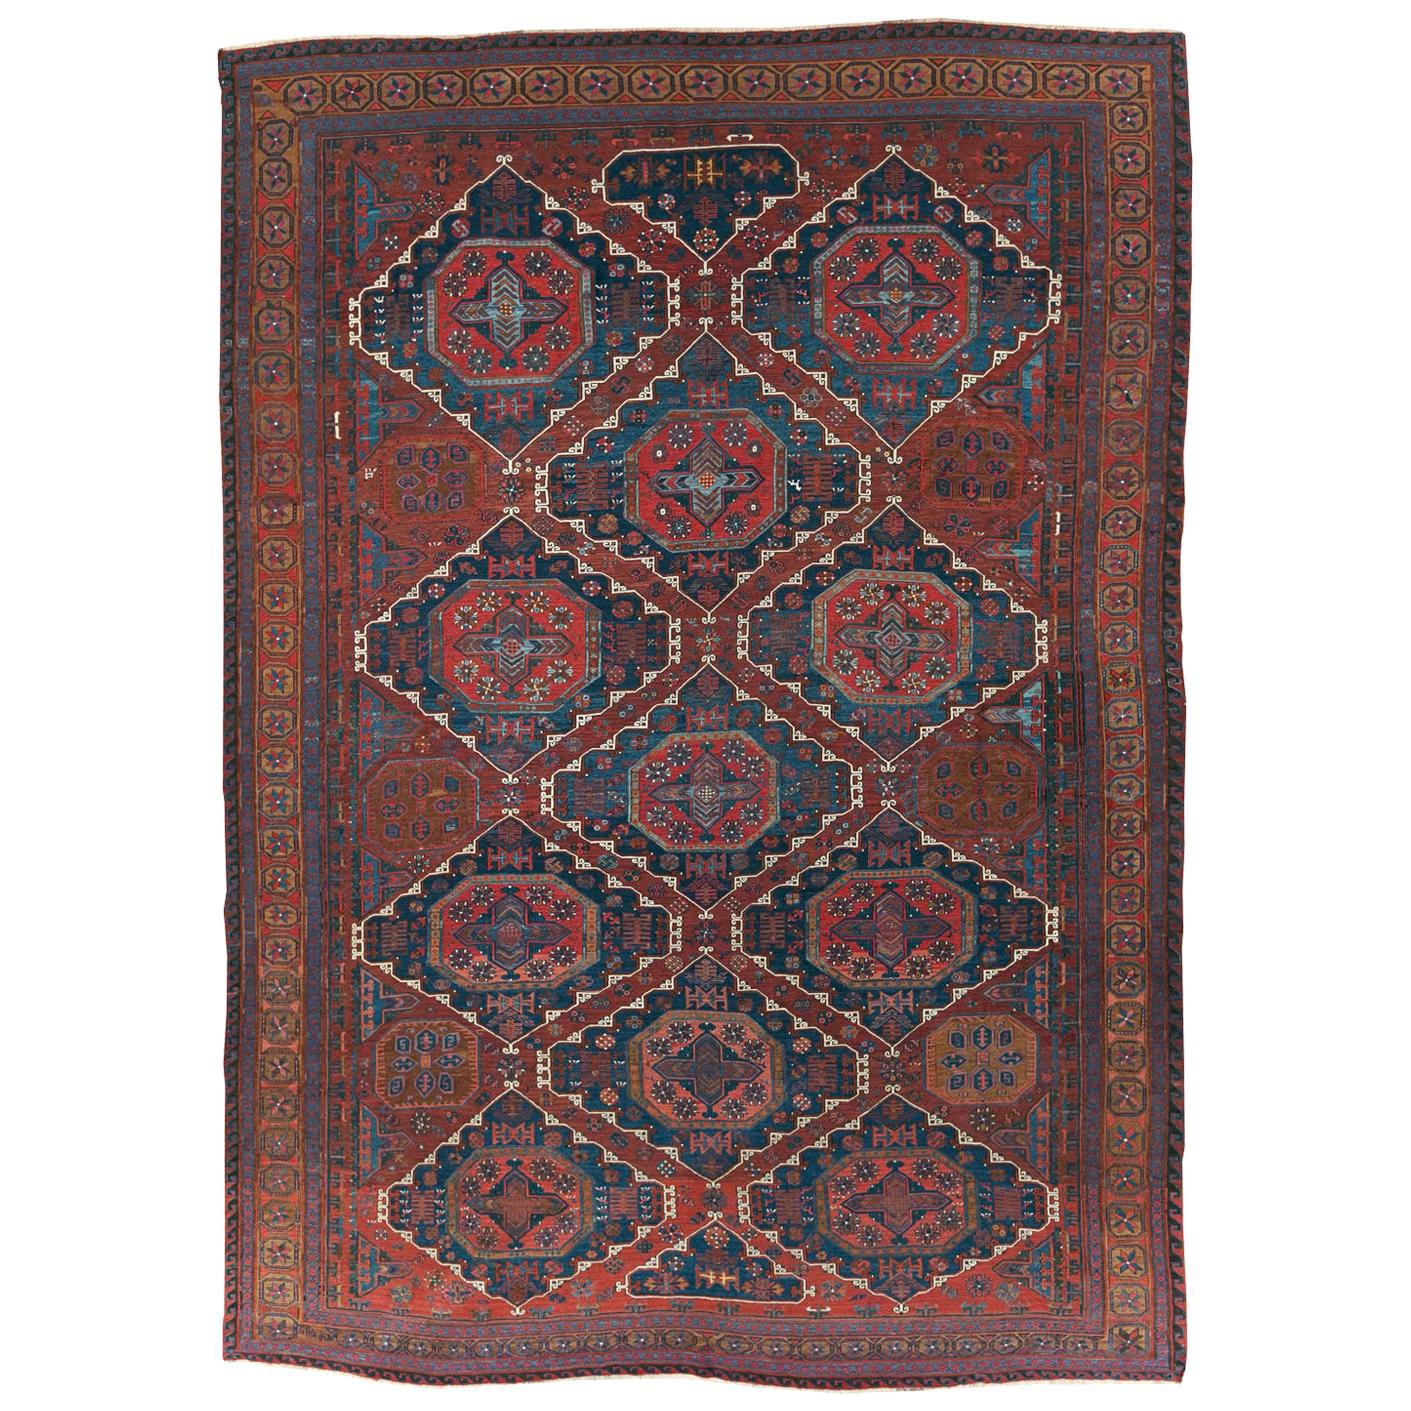 Early 20th Century Handmade Central Asian Flat-Weave Soumak Room Size Carpet